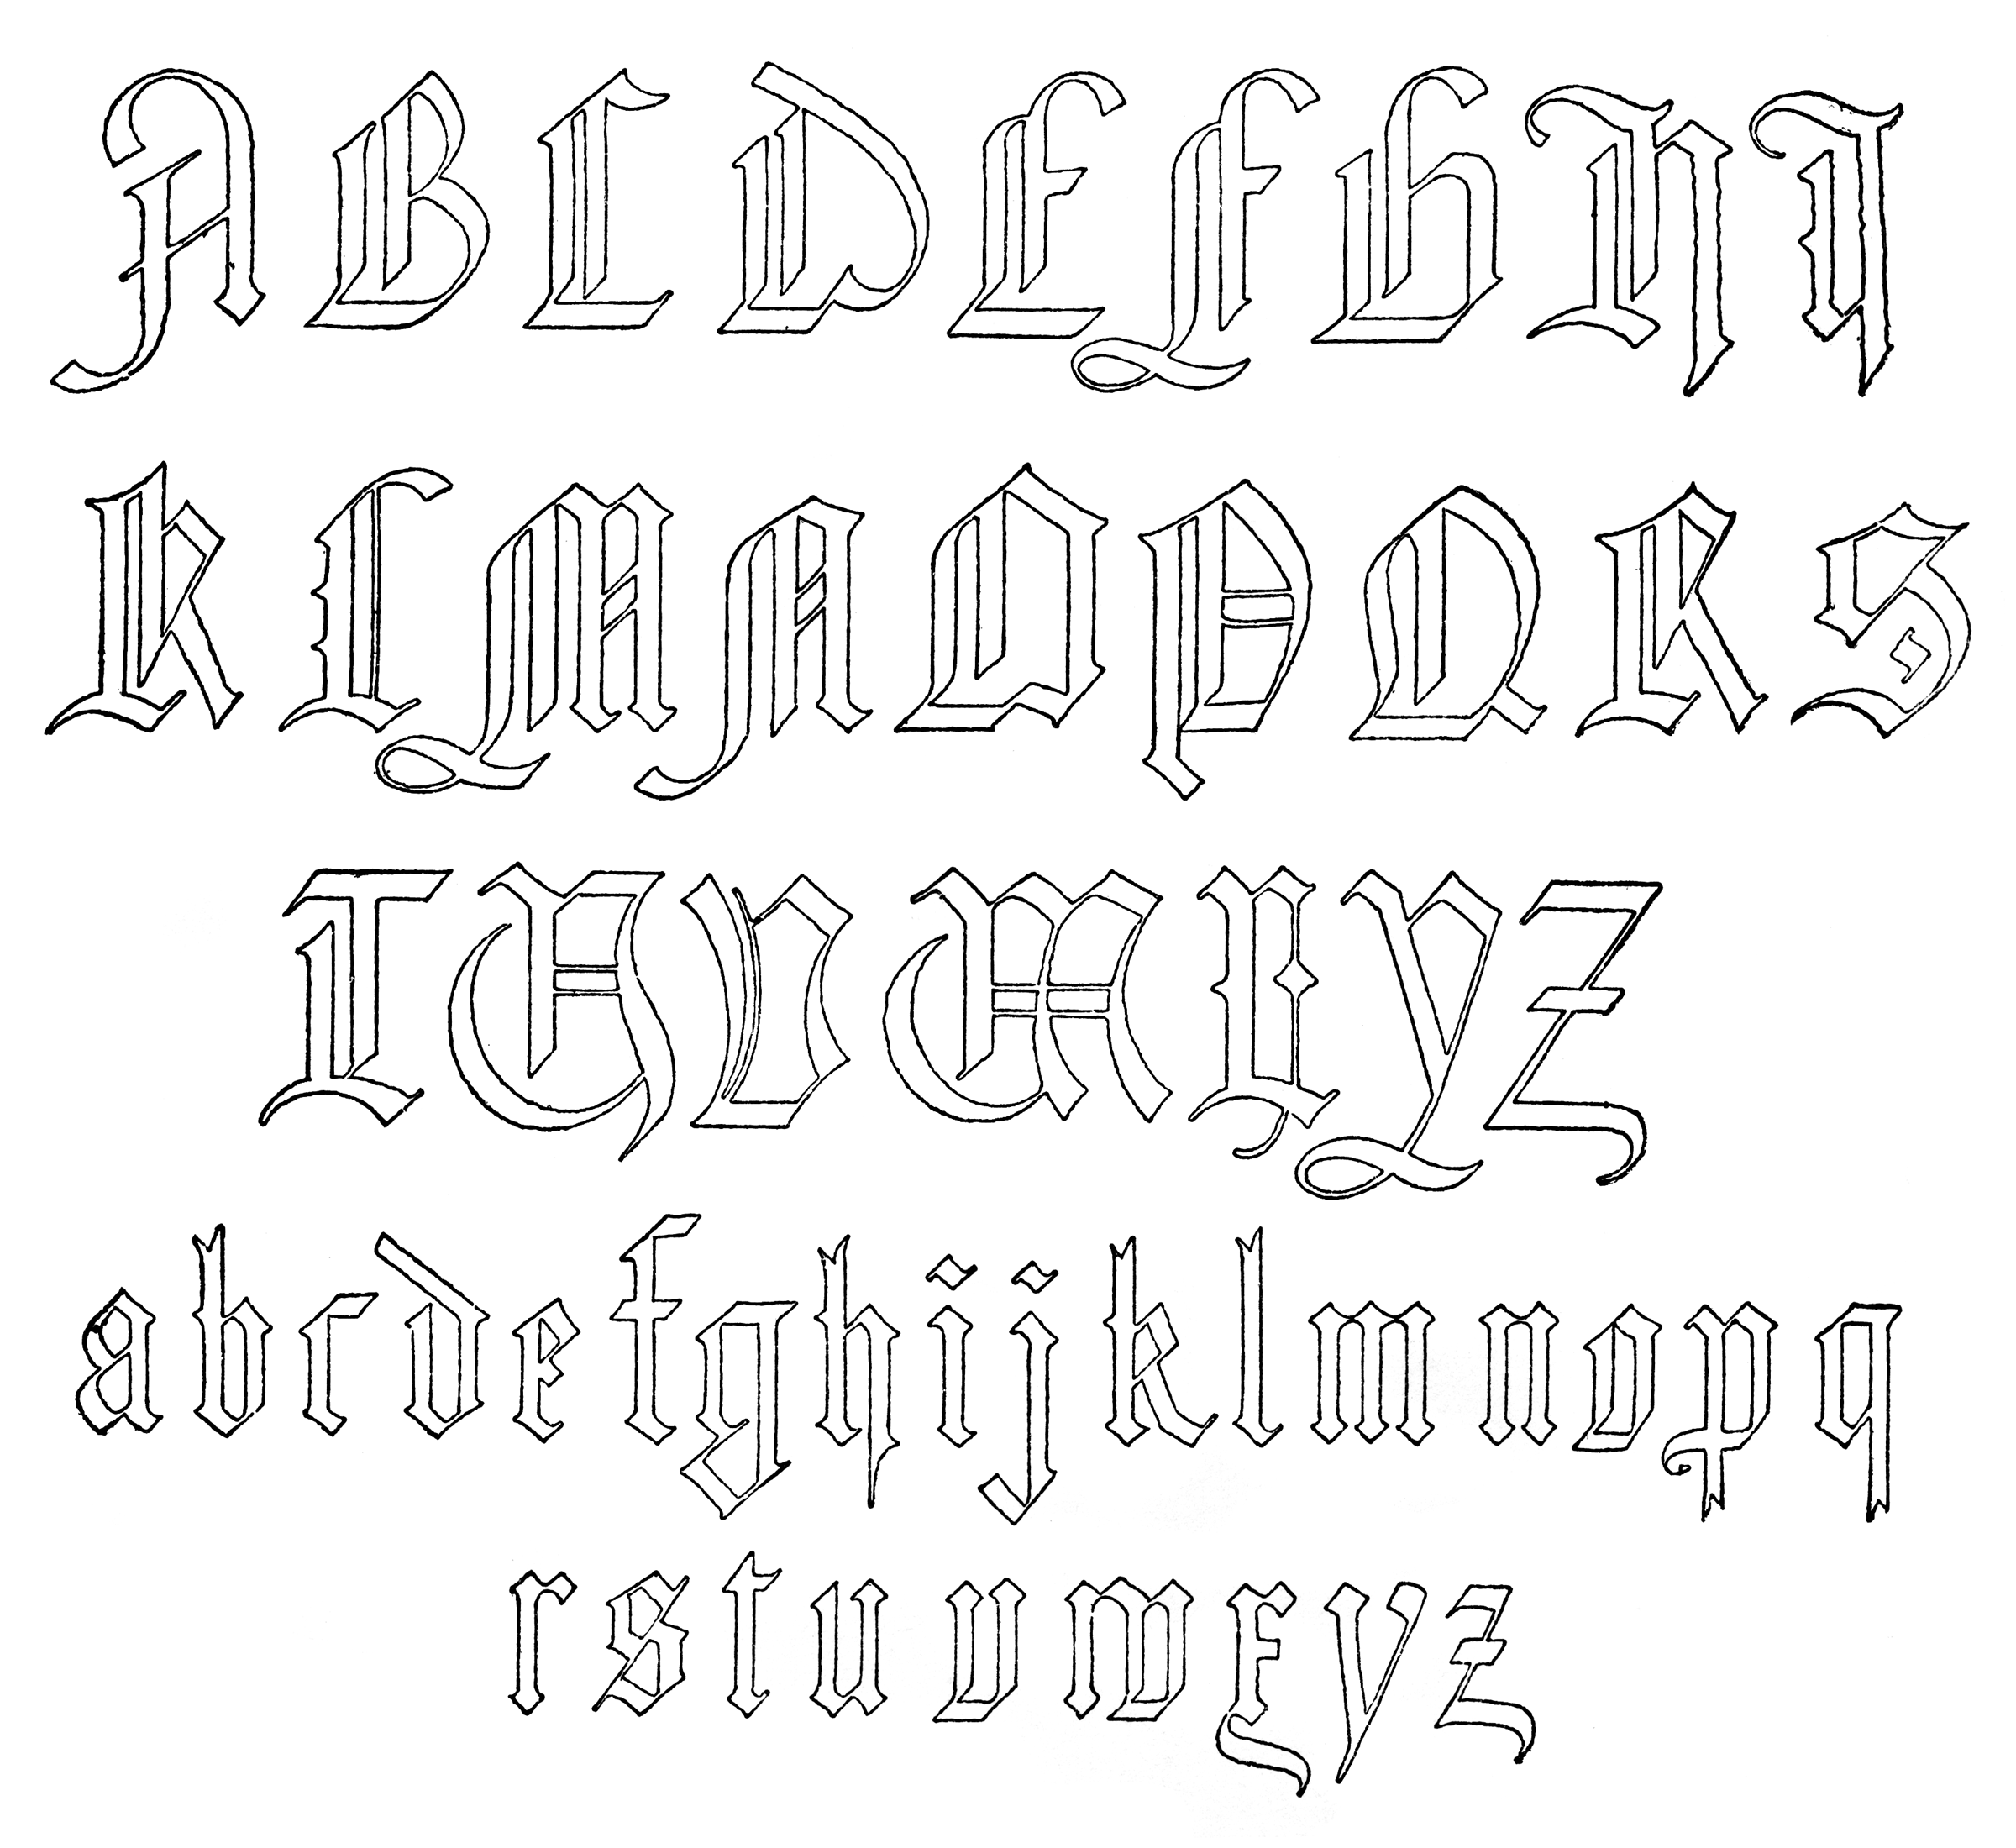 Old german text font dafont